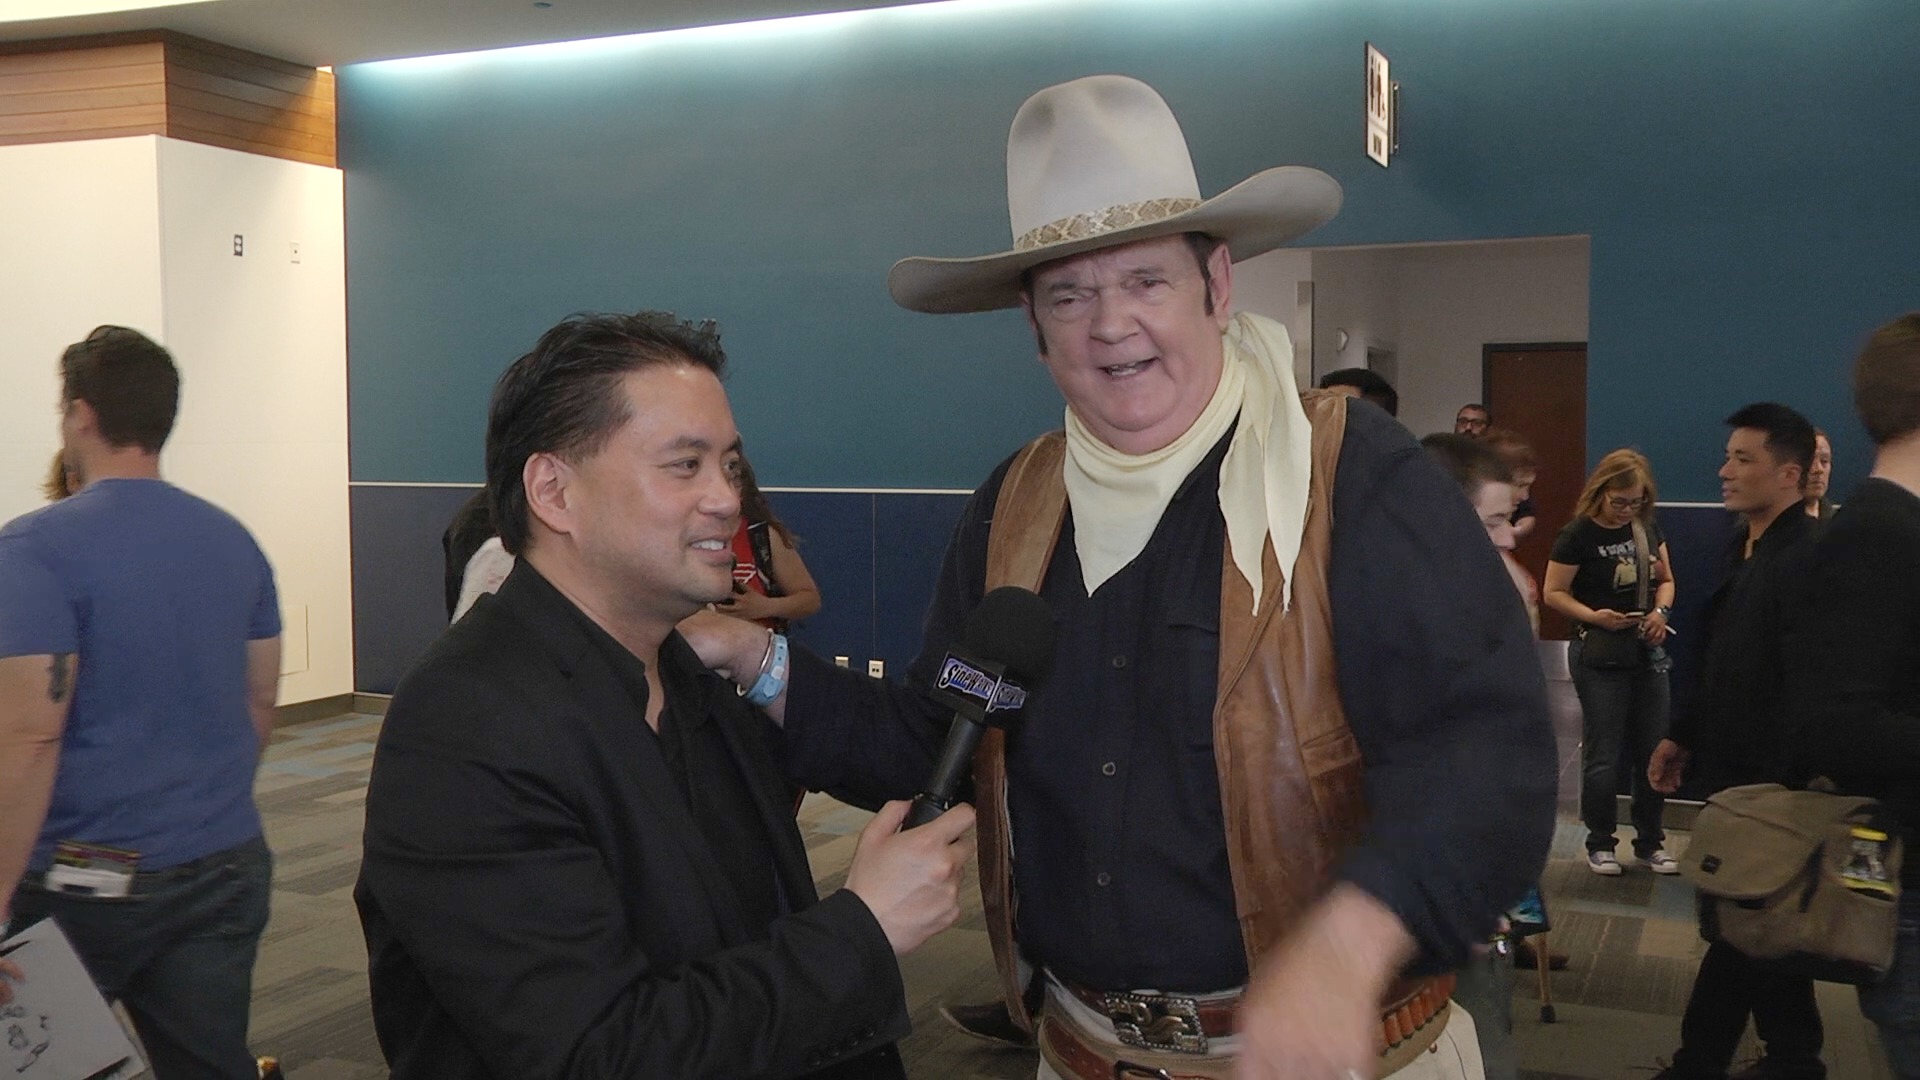 Host Richard R. Lee interviews Jeffrey Wayne Sutherland, who is a John Wayne impersonator